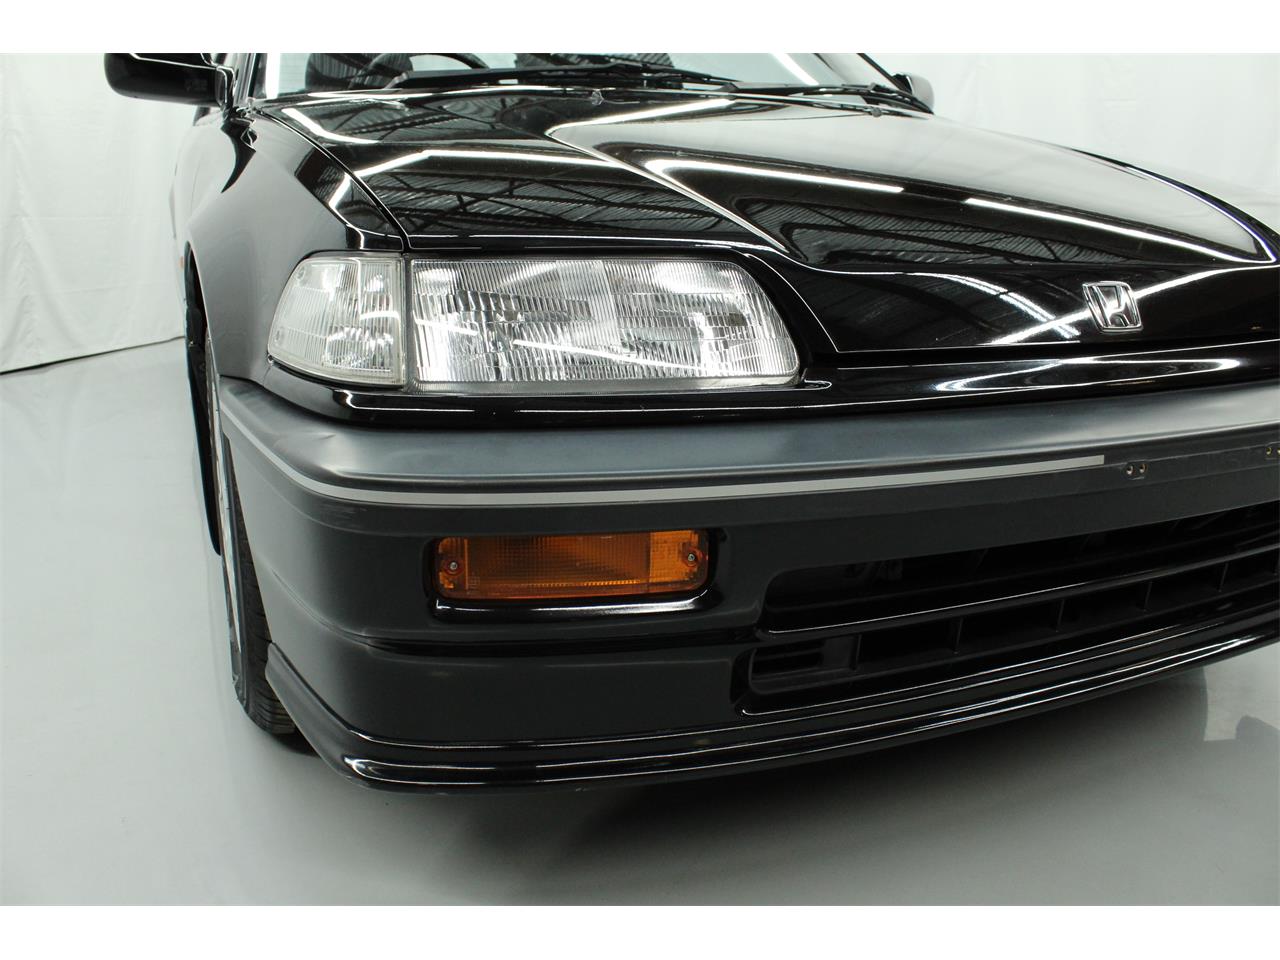 1988 Honda Civic for Sale | ClassicCars.com | CC-1194264